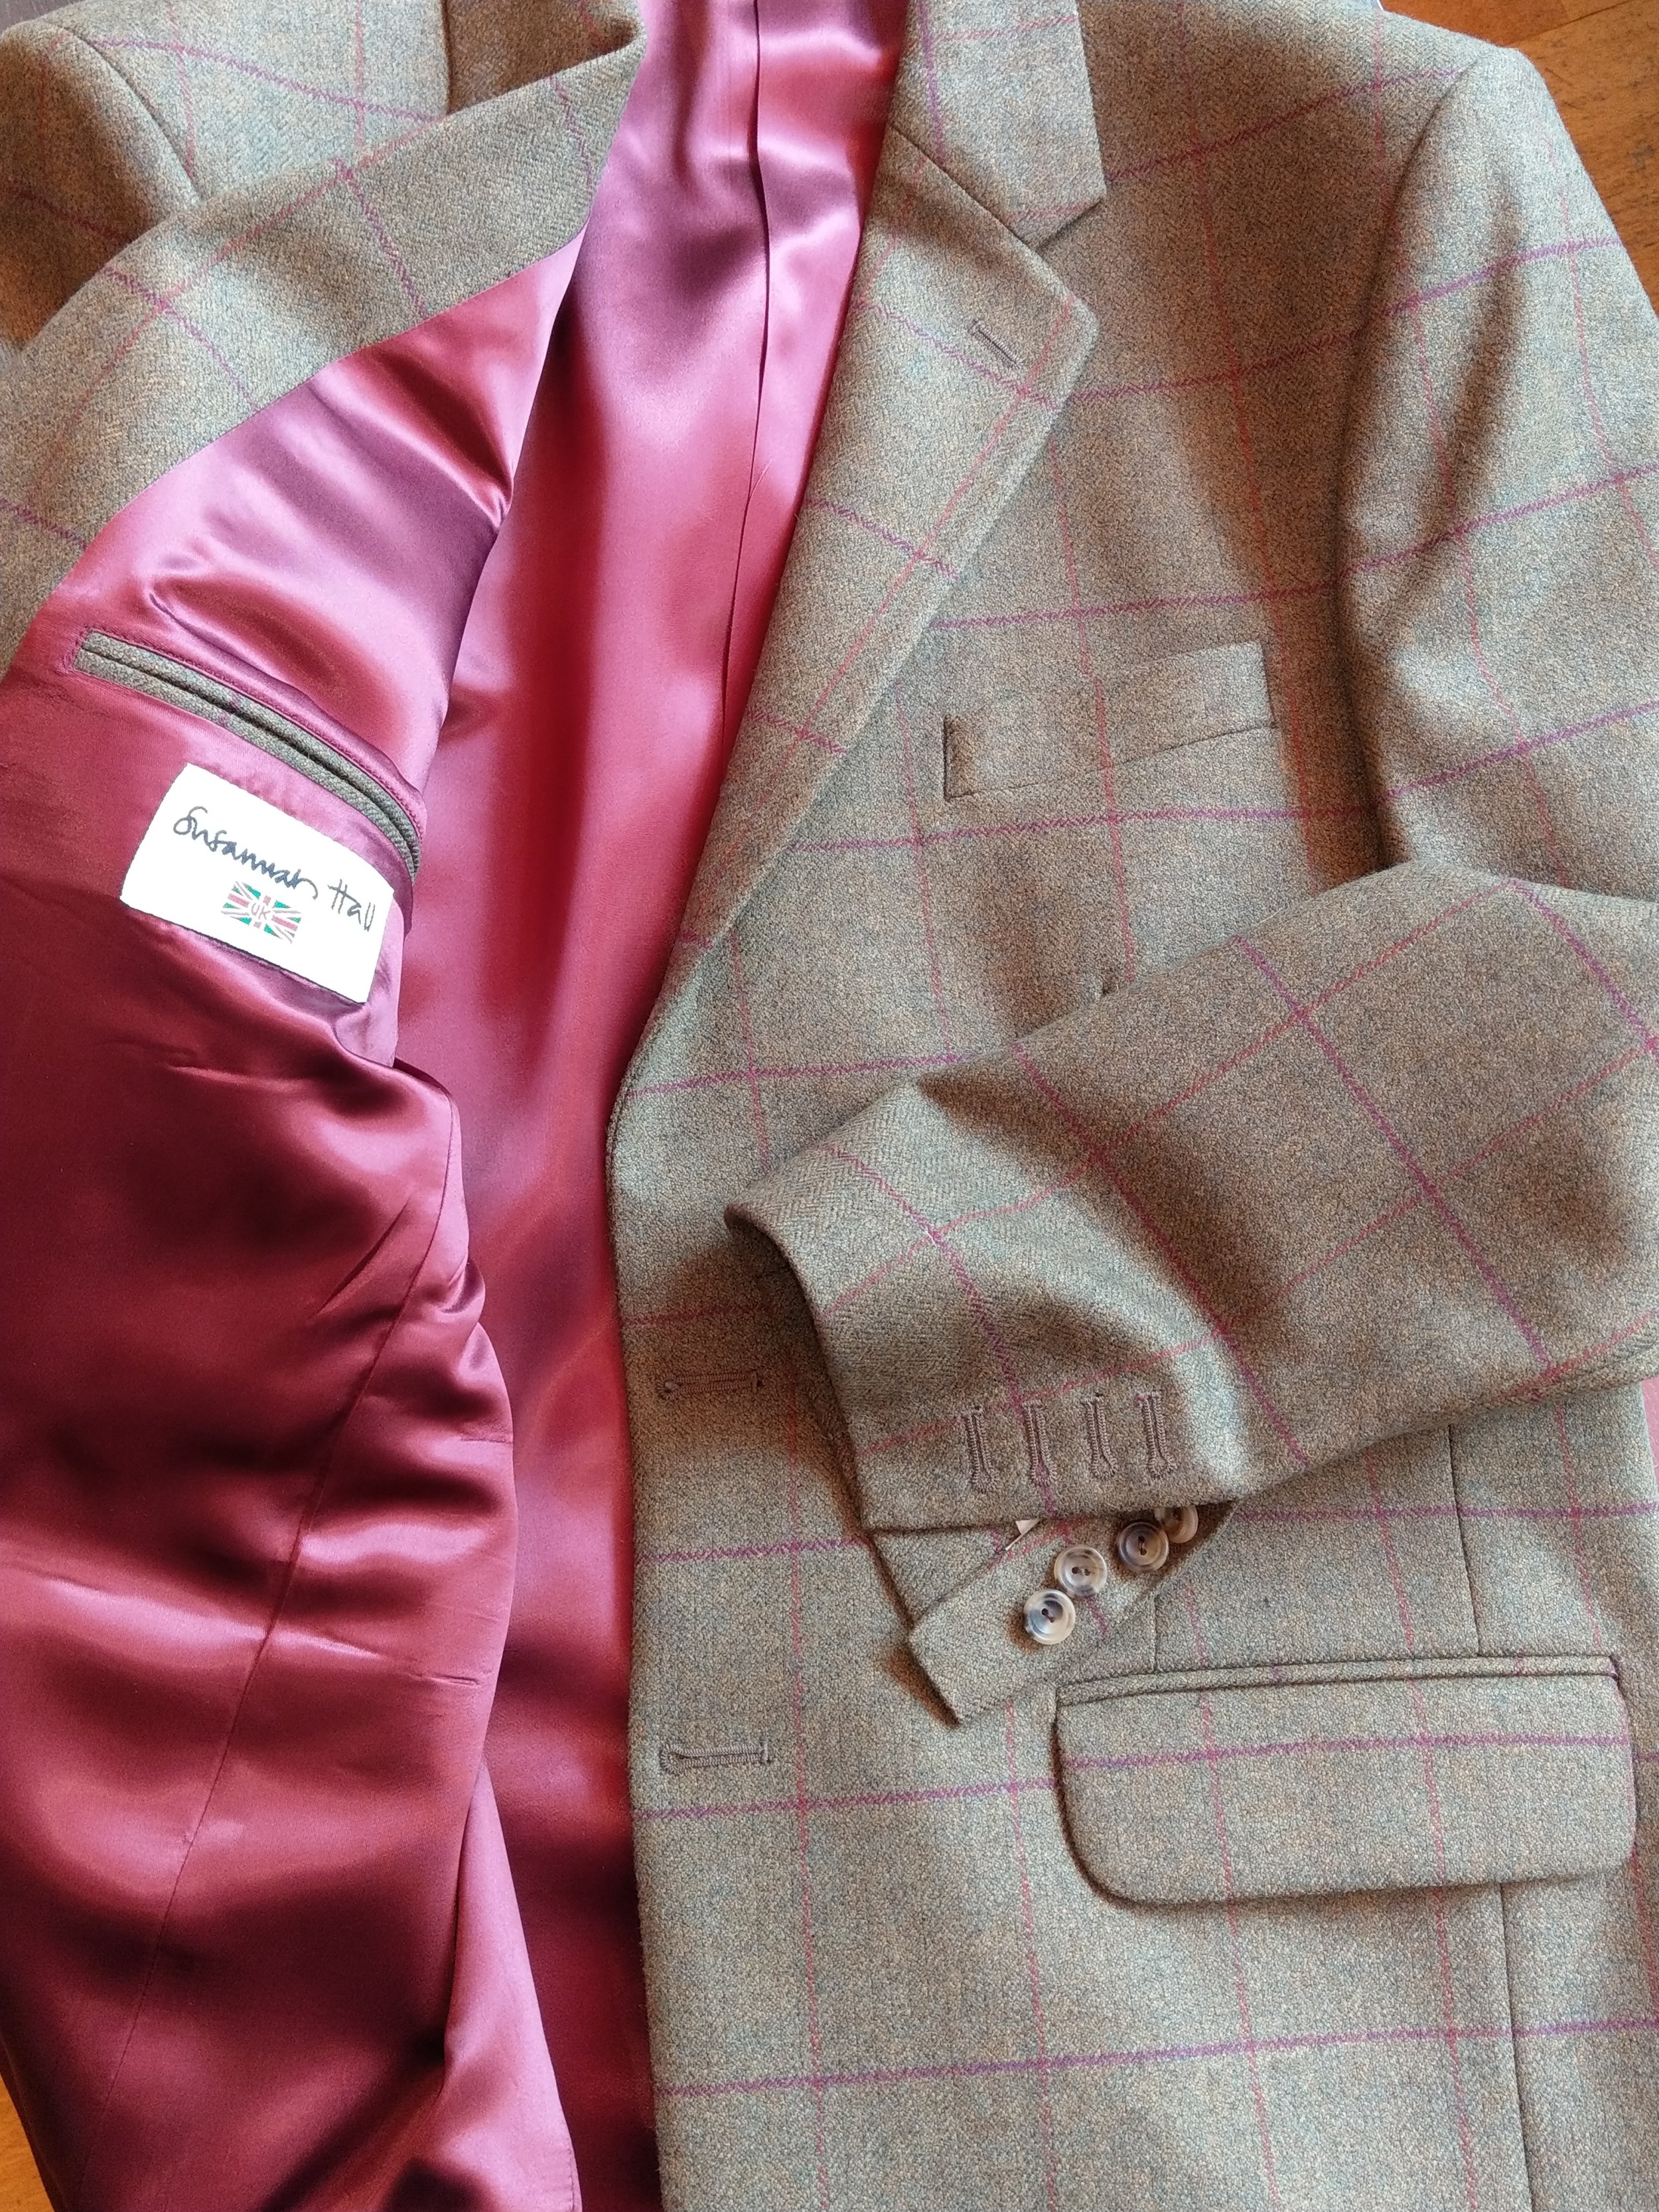 tweed-jacket-bespoke-tailor-johnstons-elgin-susannah-hall-made-britain-uk.jpg